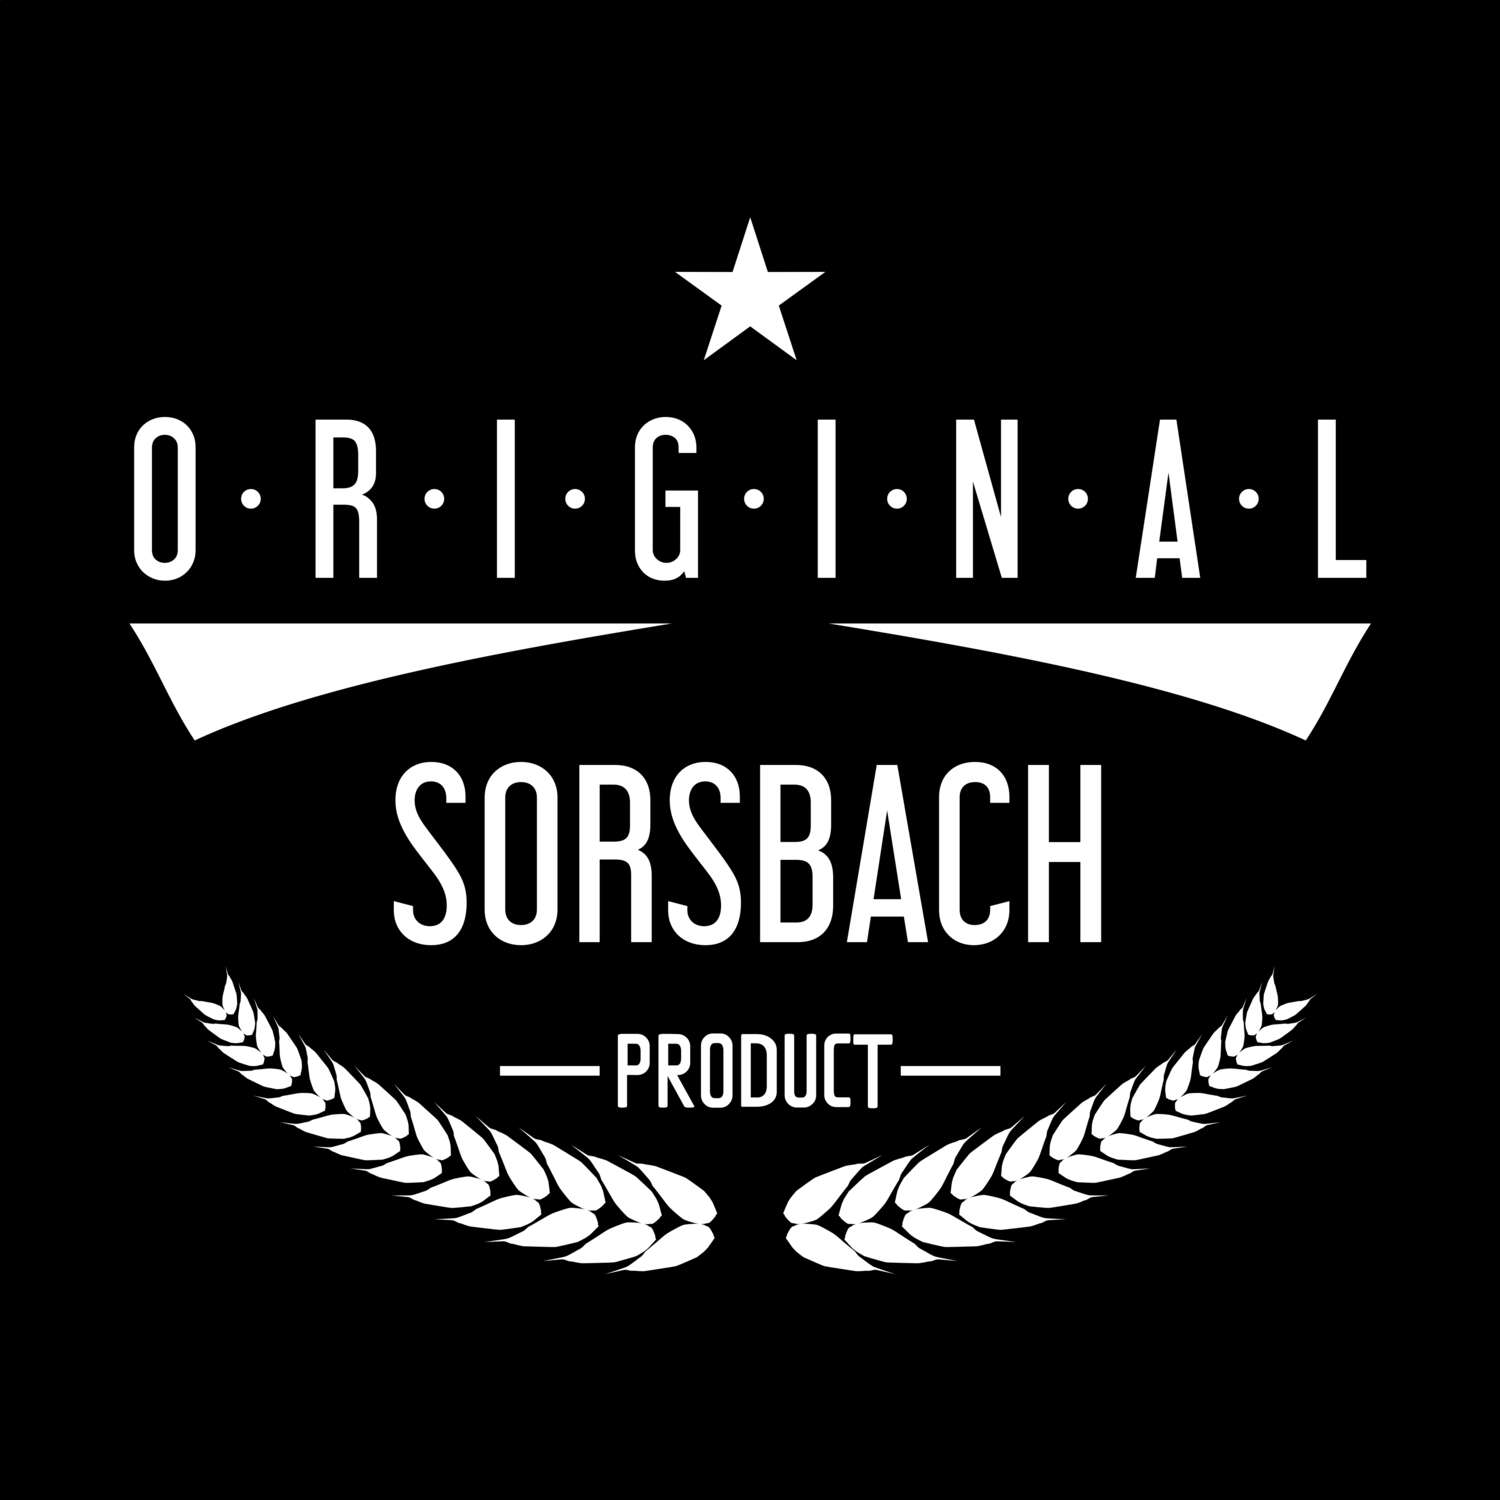 Sorsbach T-Shirt »Original Product«